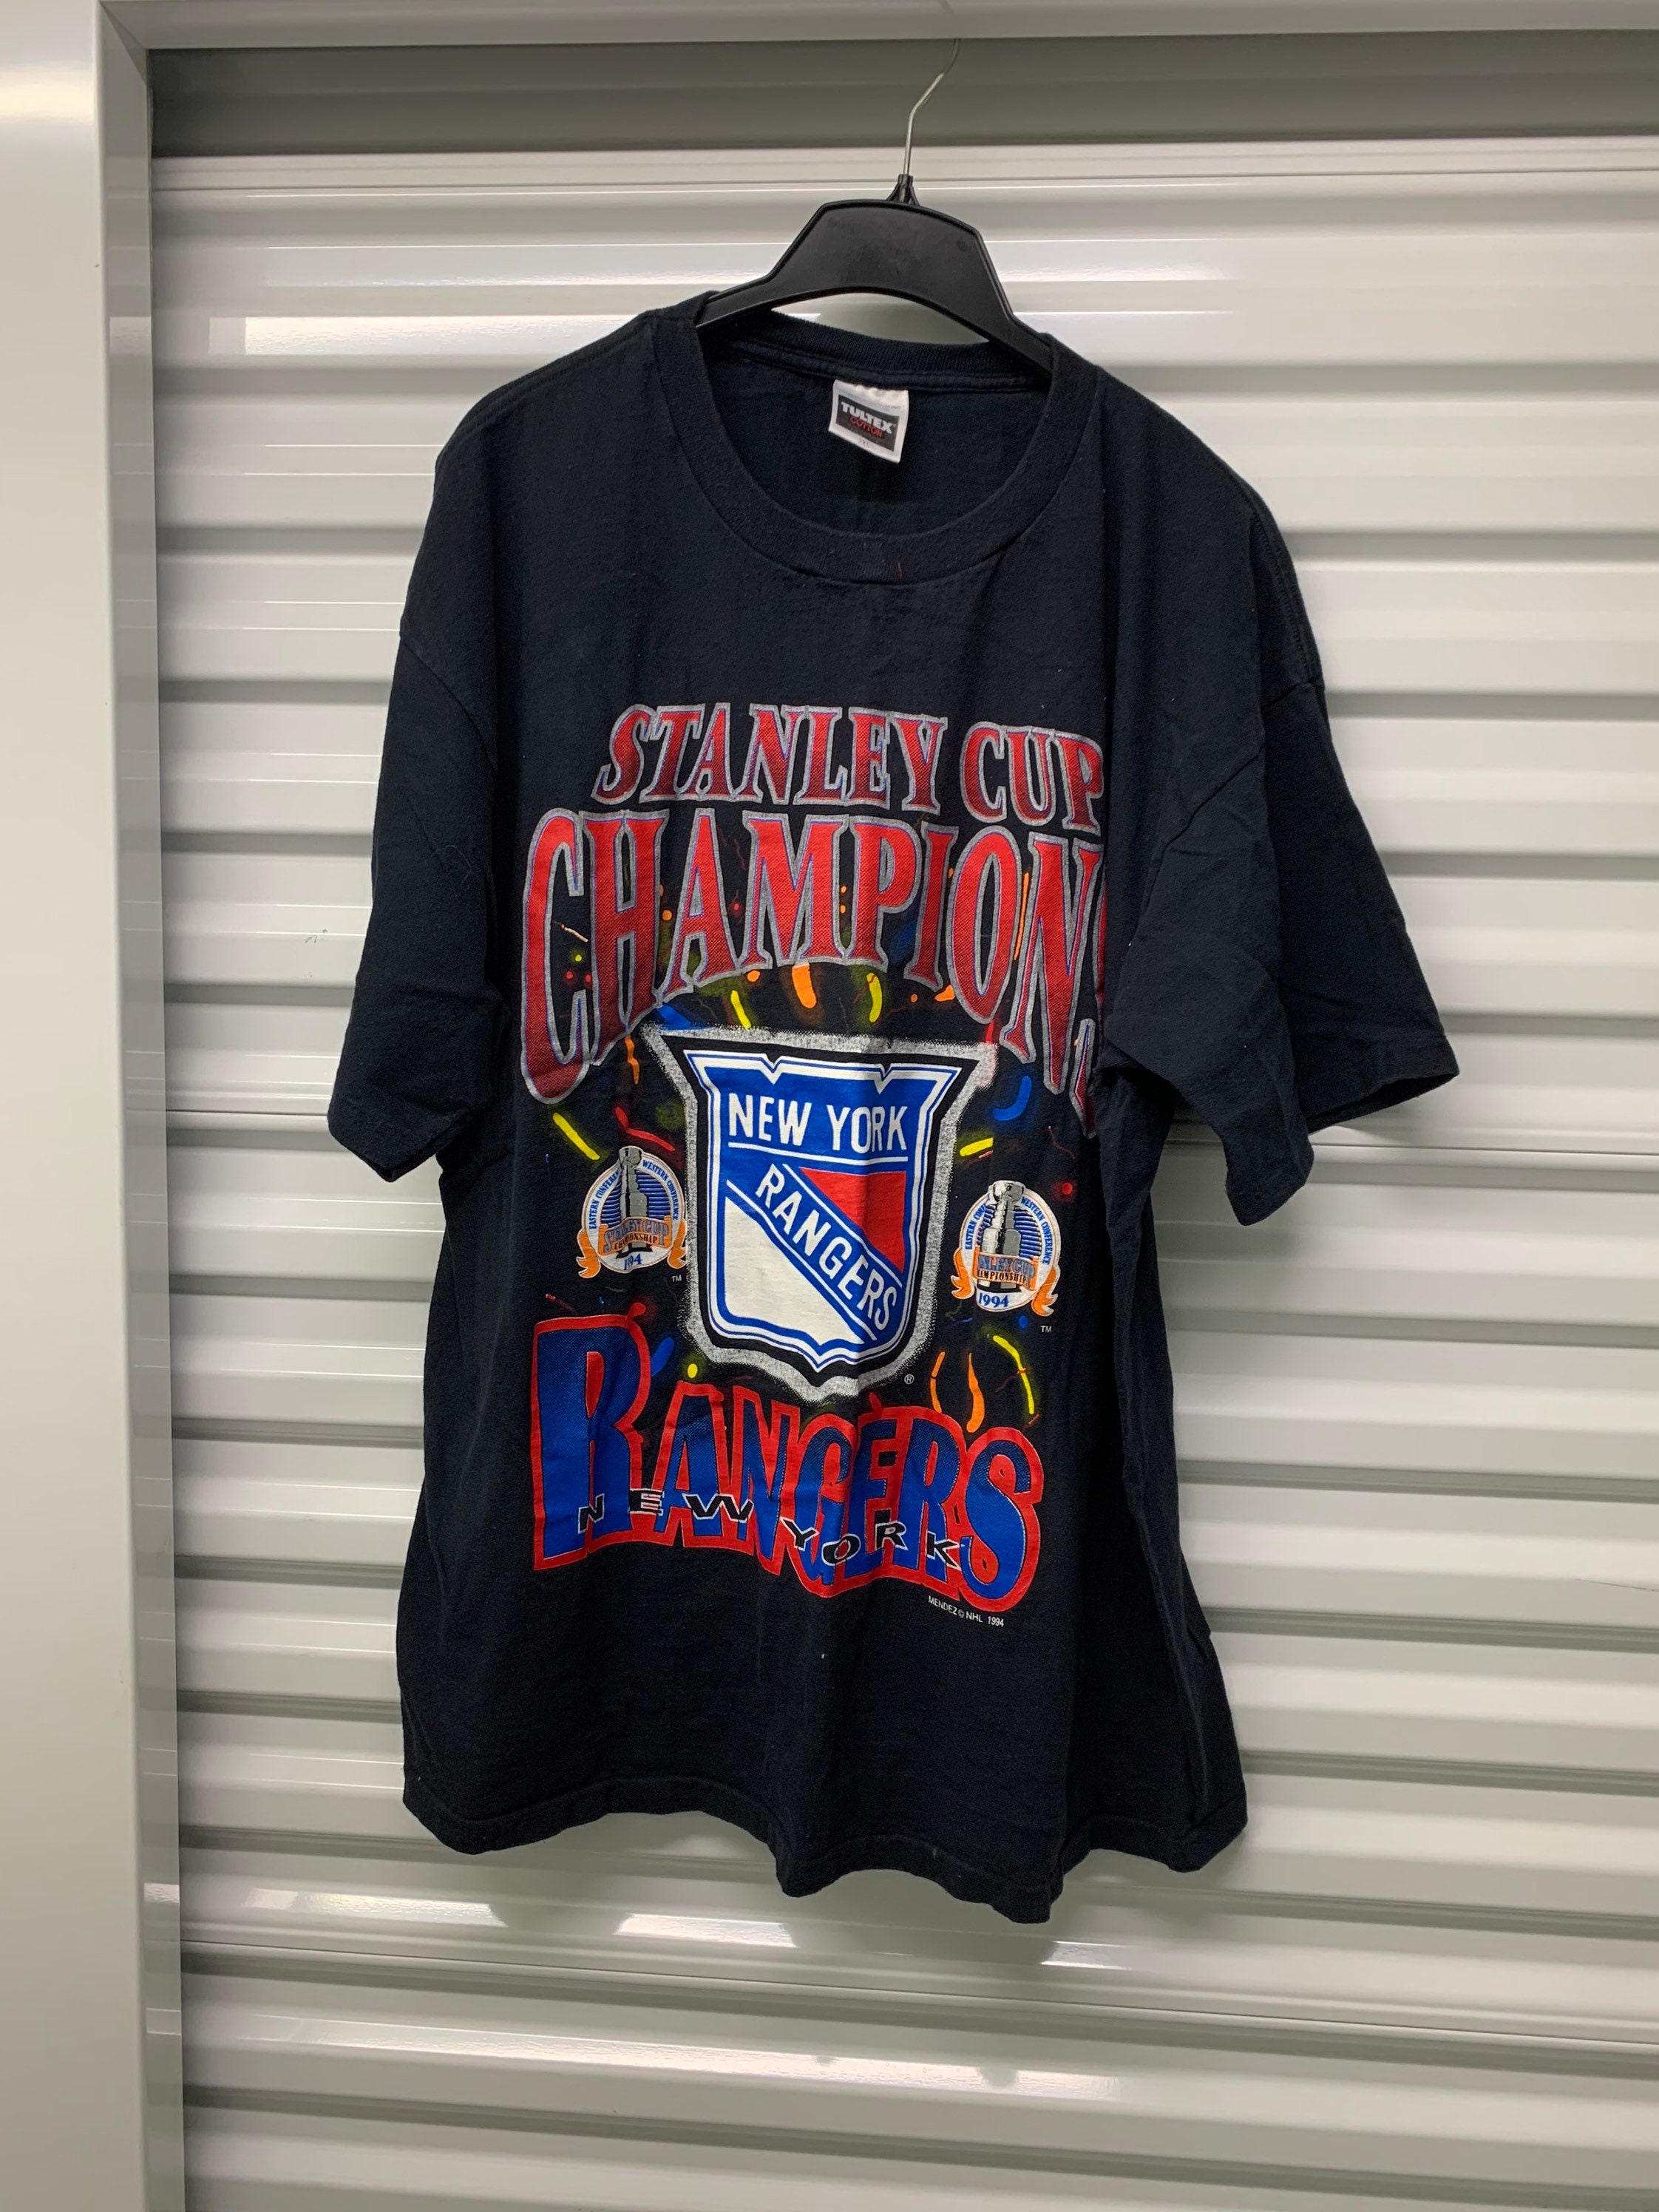 Vintage Vancouver Canucks Shirt Champion L – Laundry